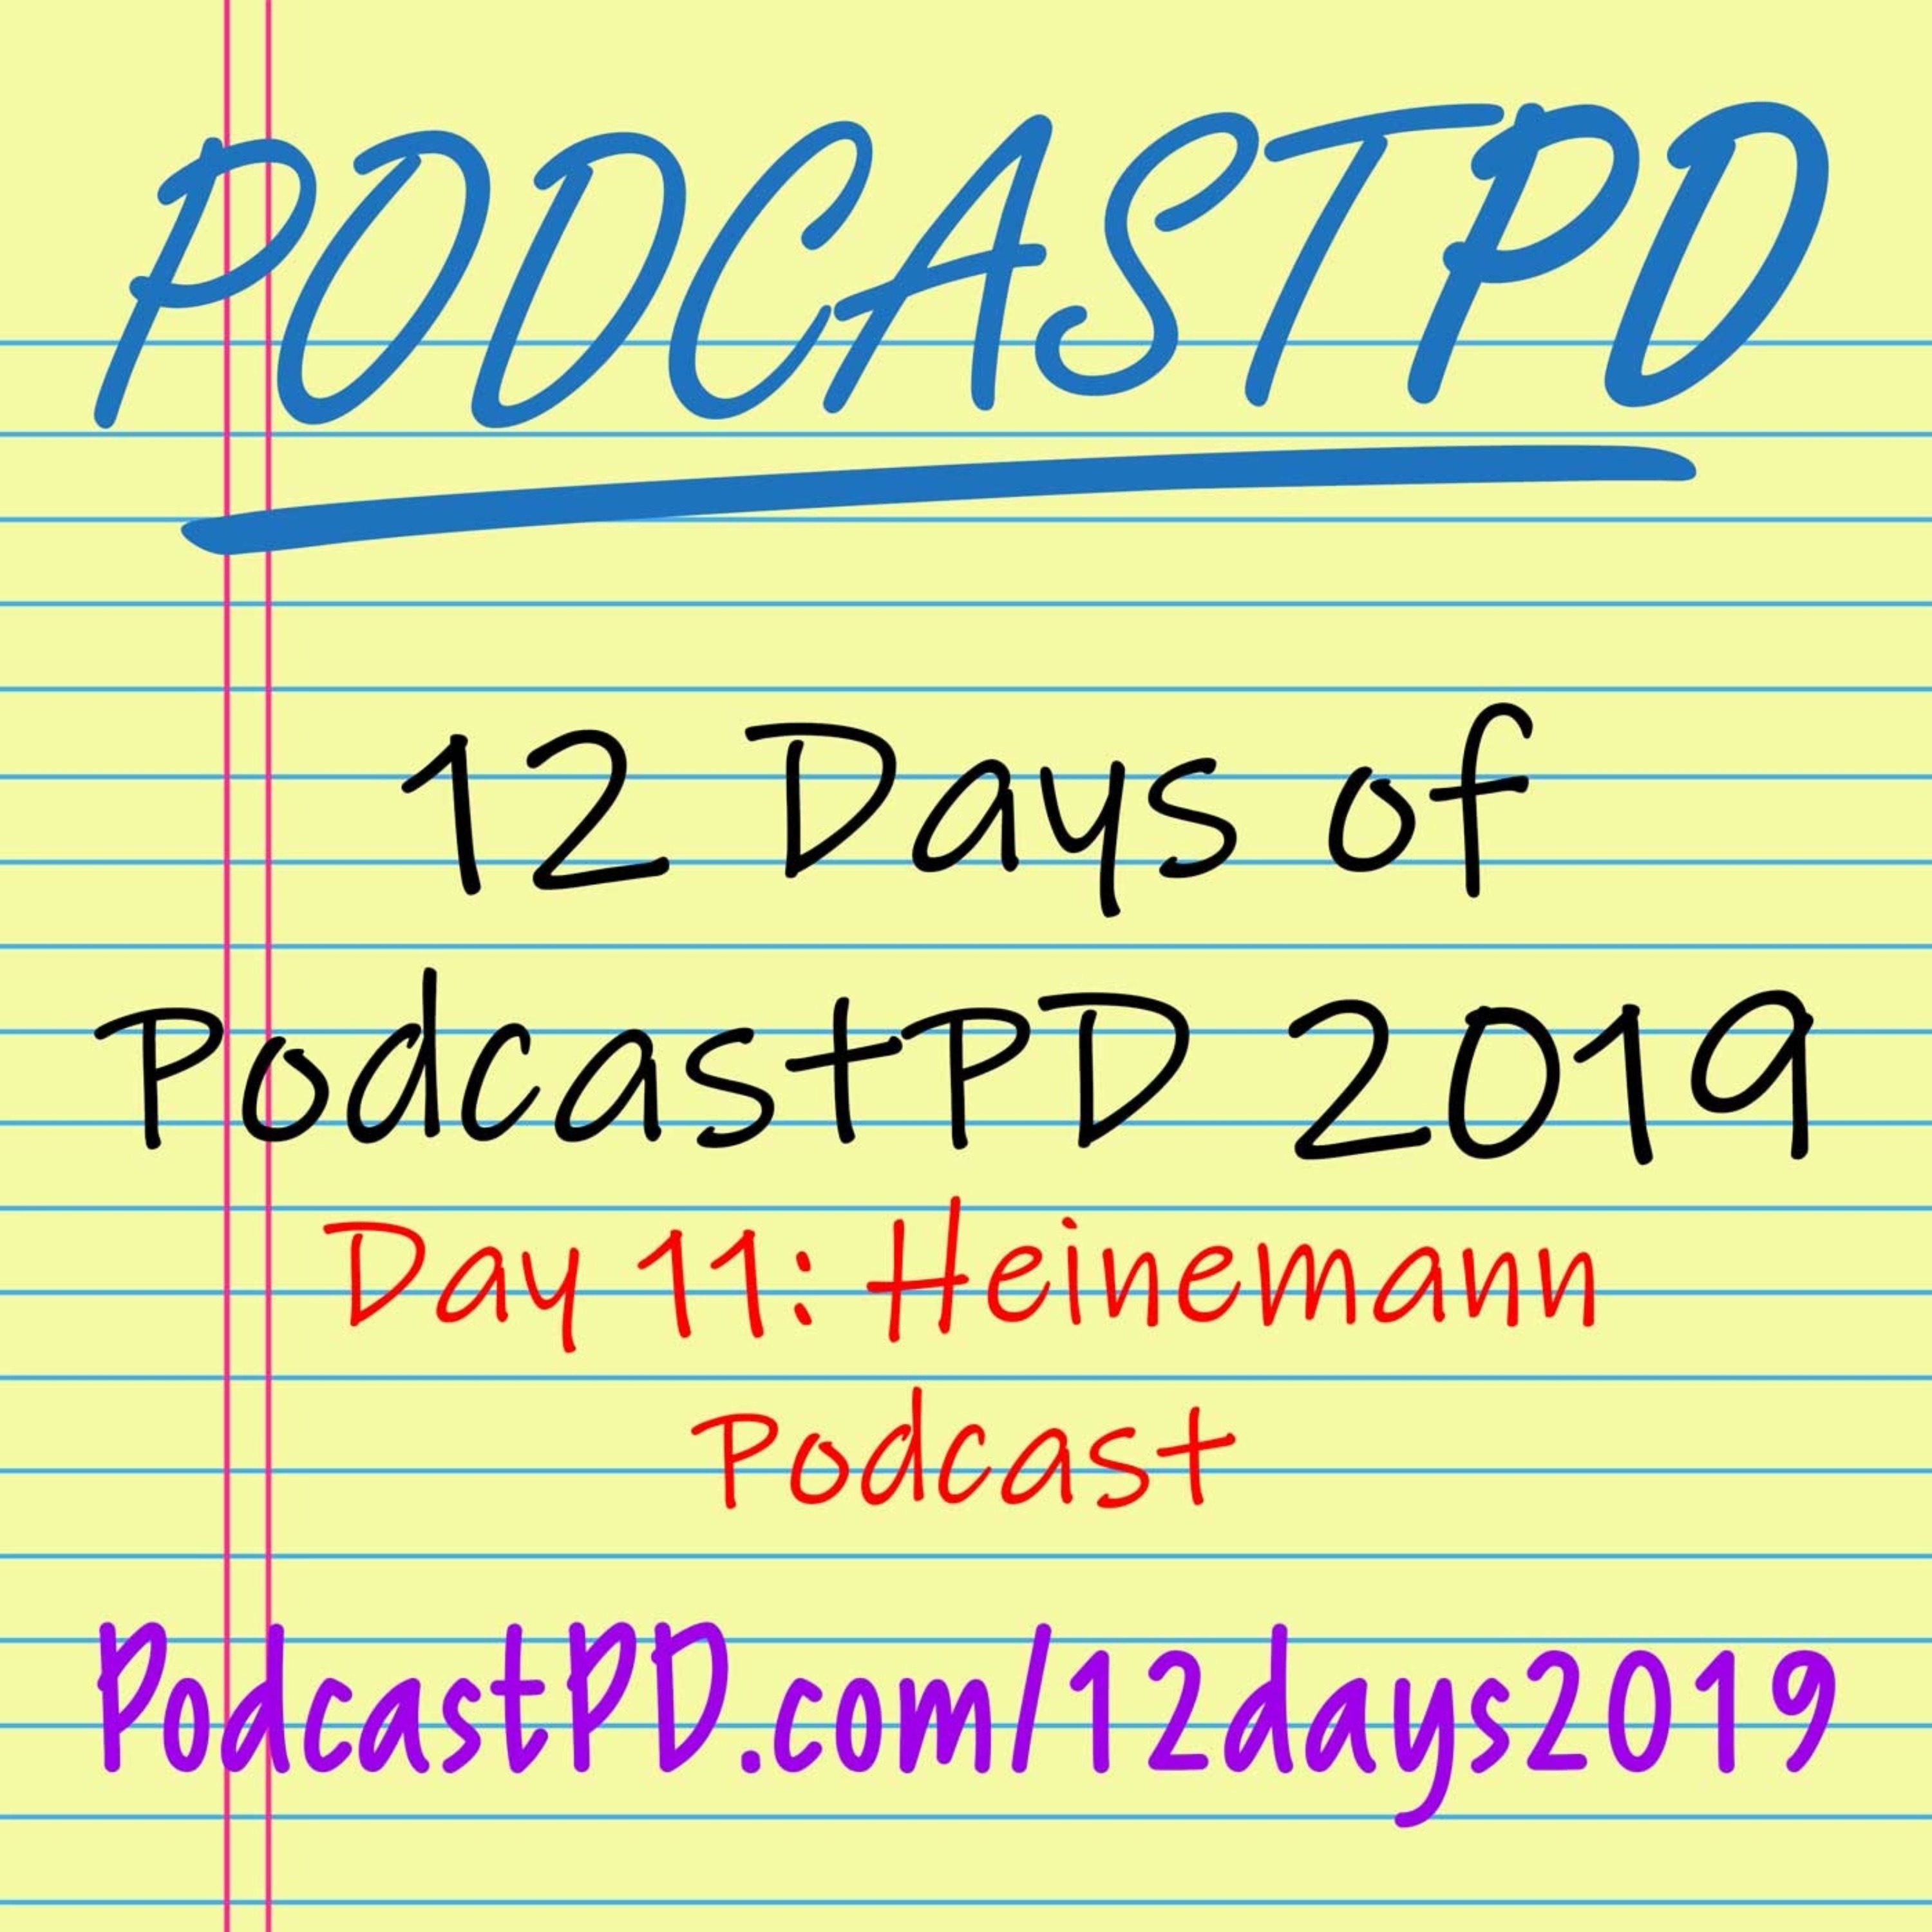 Heinemann Podcast - 12 Days of PodcastPD 2019 Image